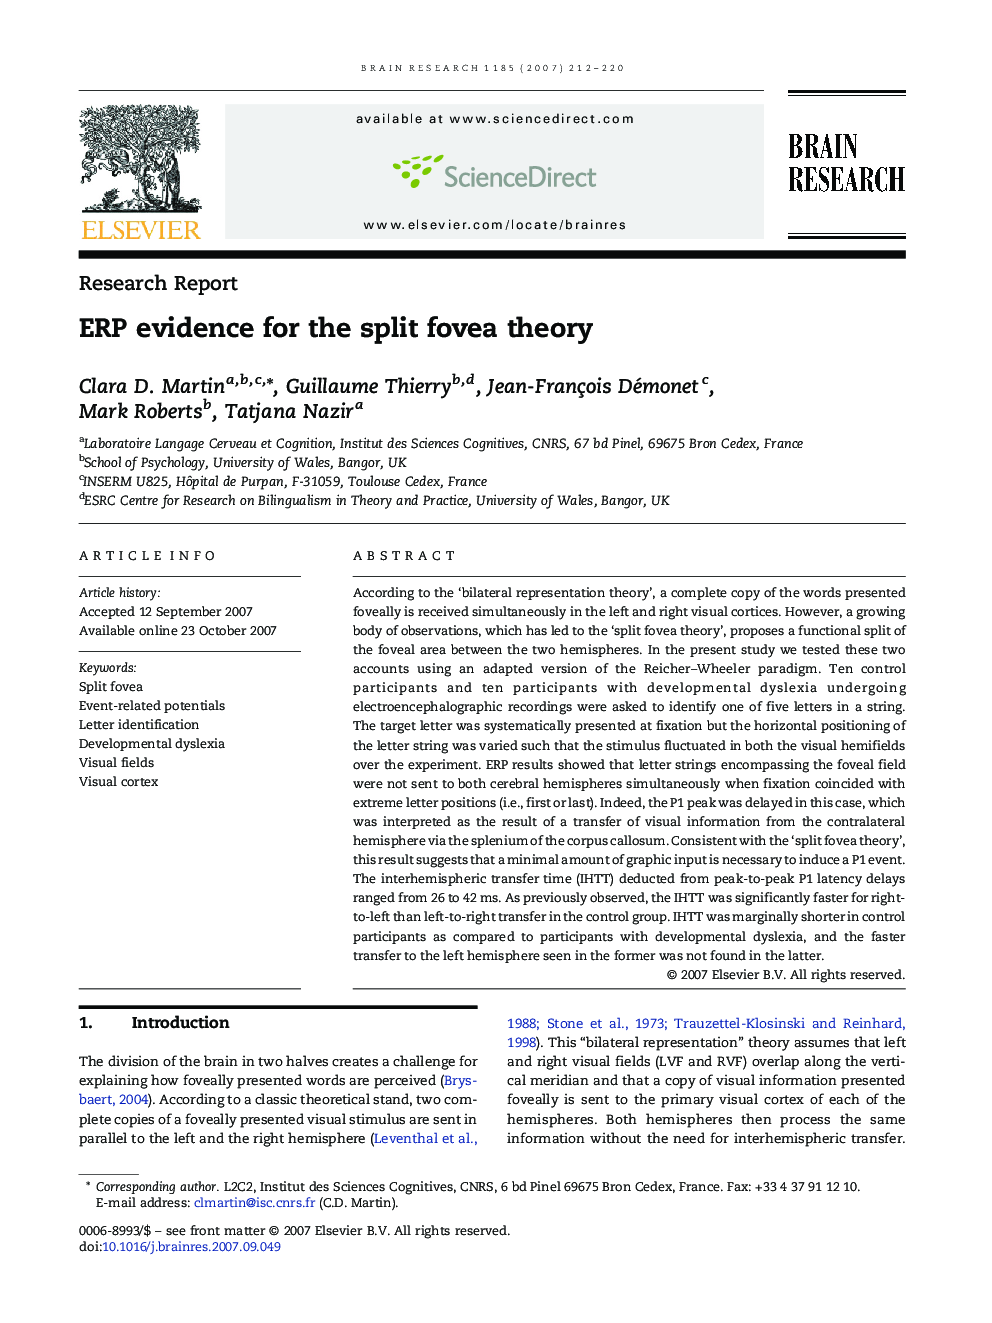 ERP evidence for the split fovea theory